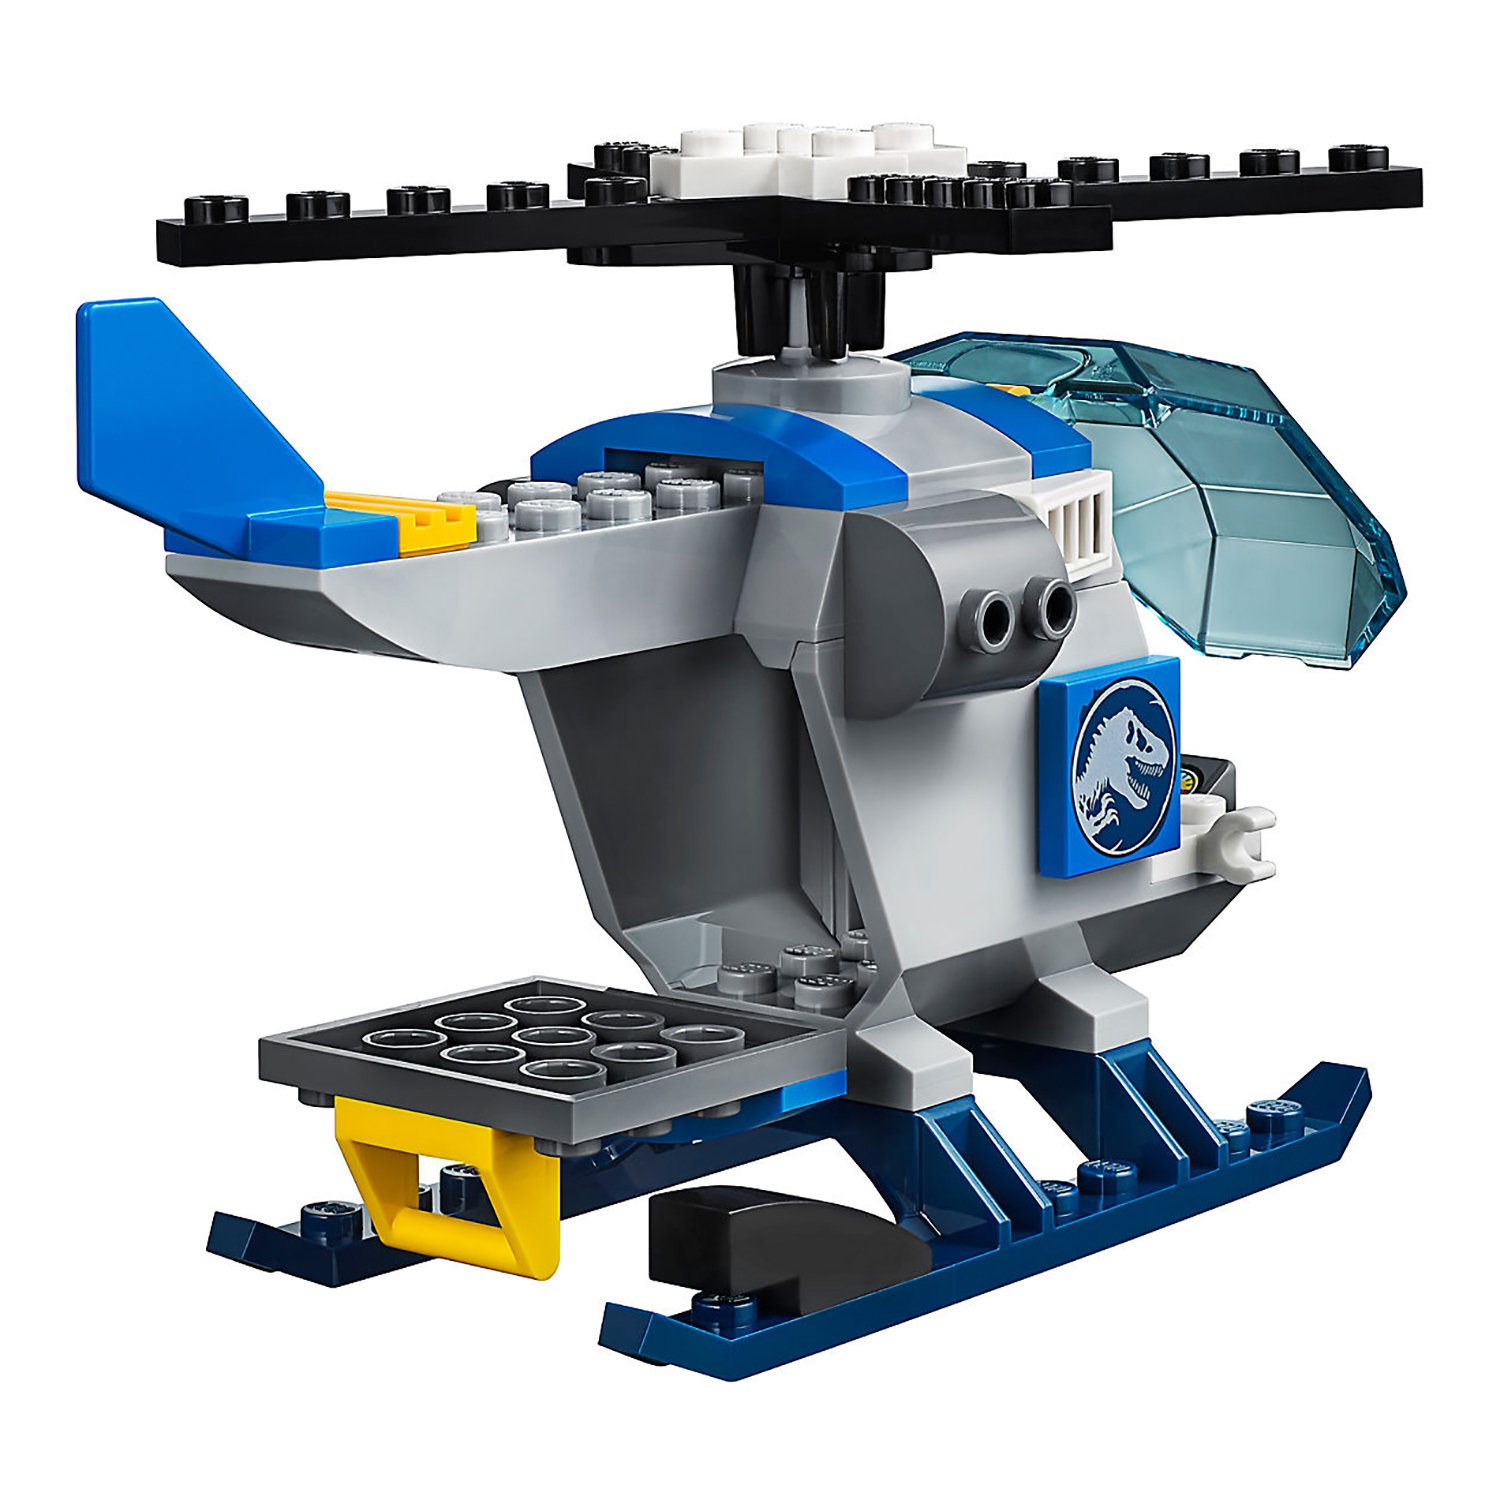 Конструктор LEGO Juniors «Побег птеранодона» 10756